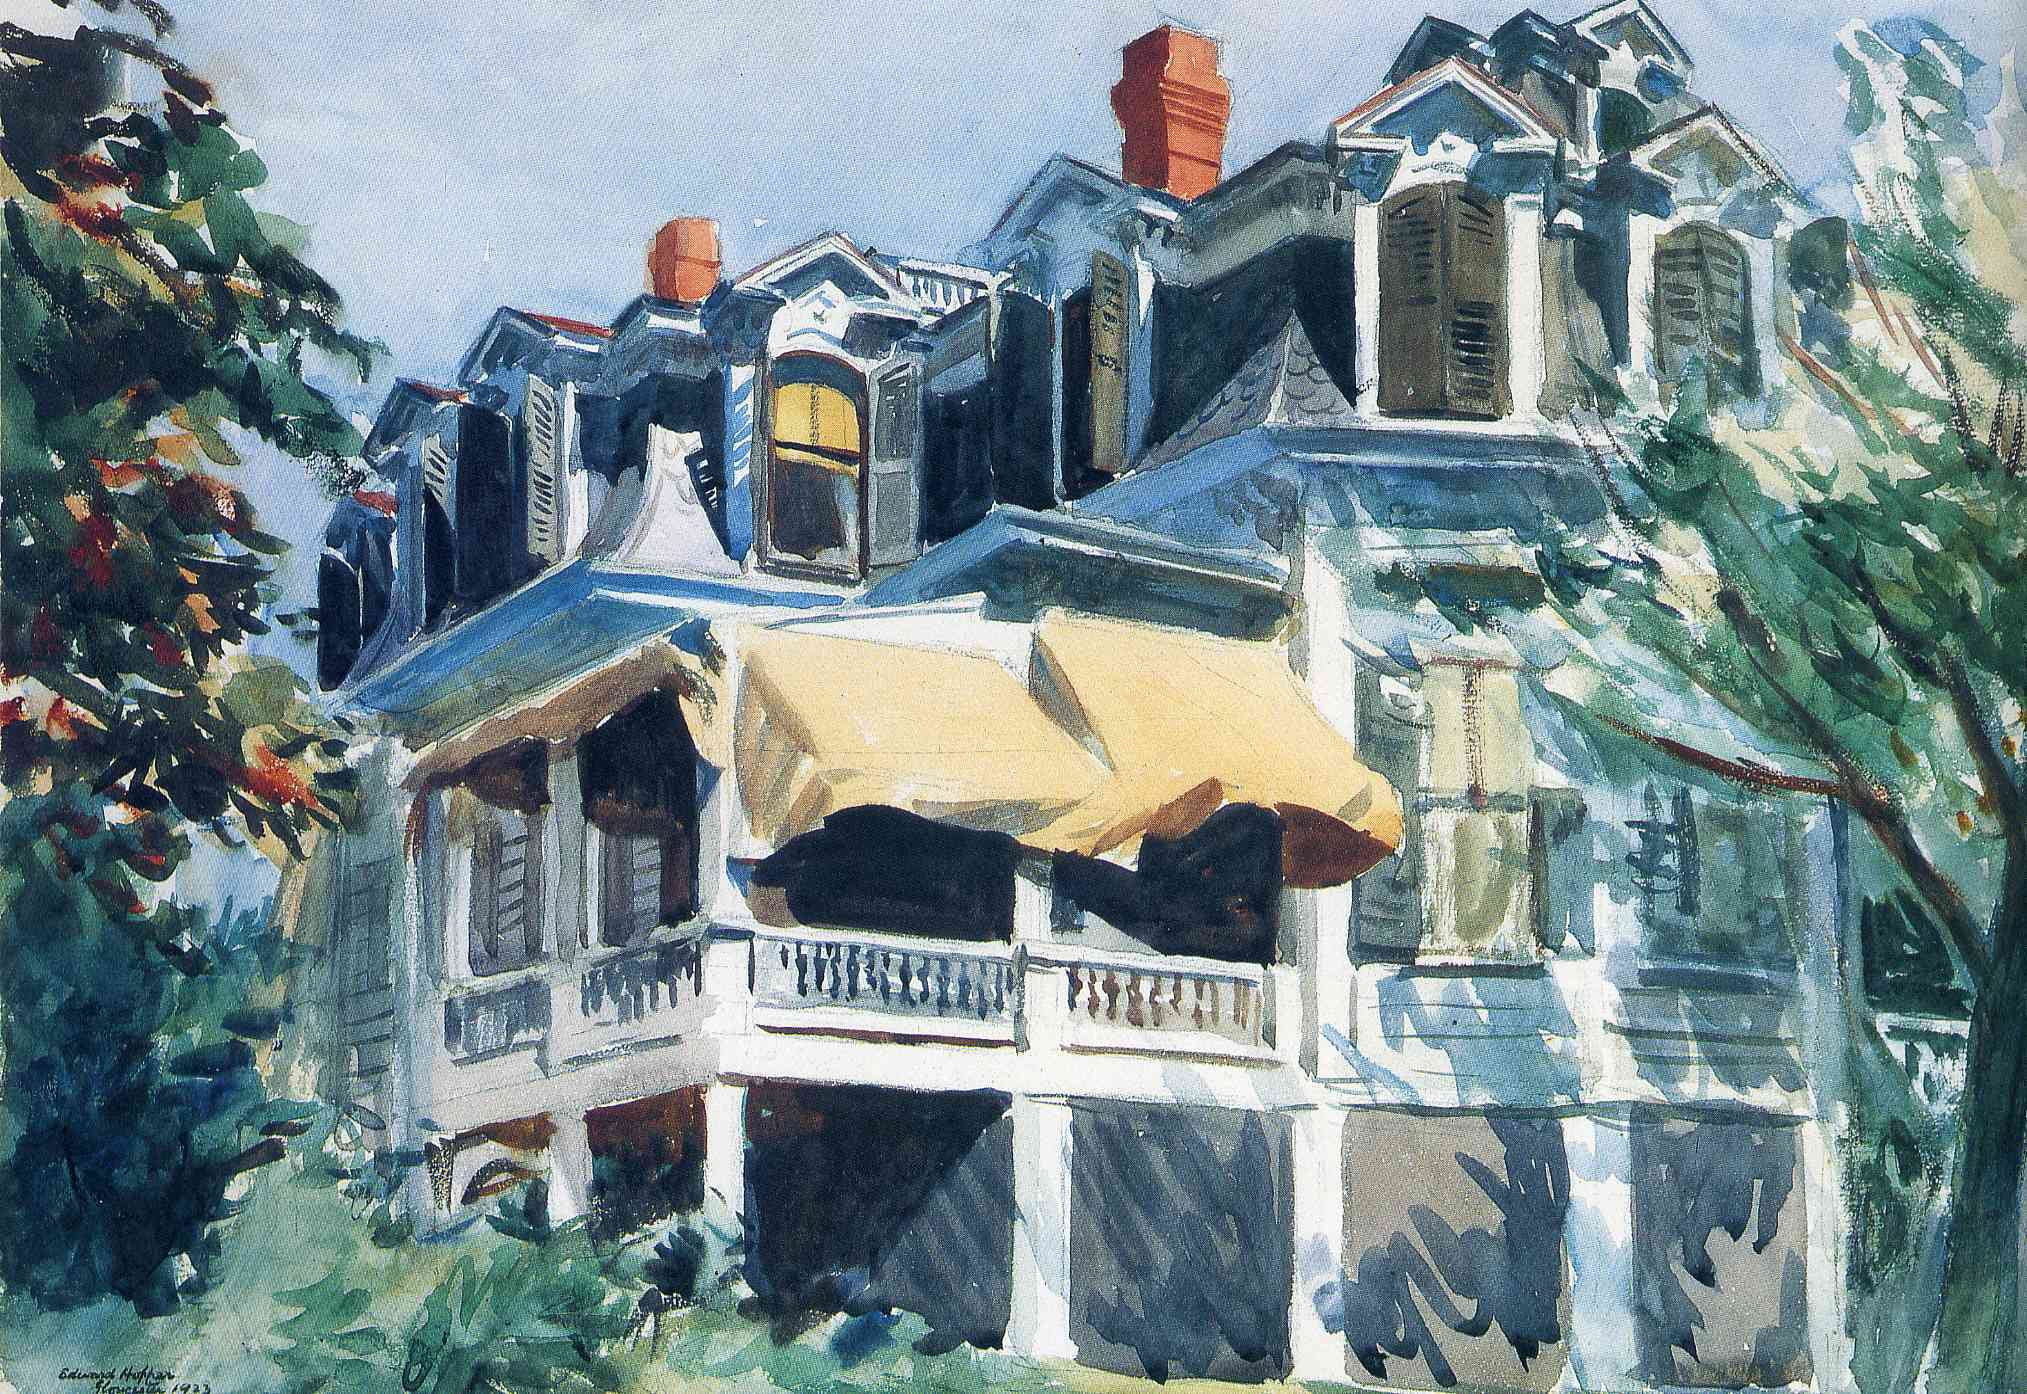 1923, Edward Hopper, The Mansard Roof